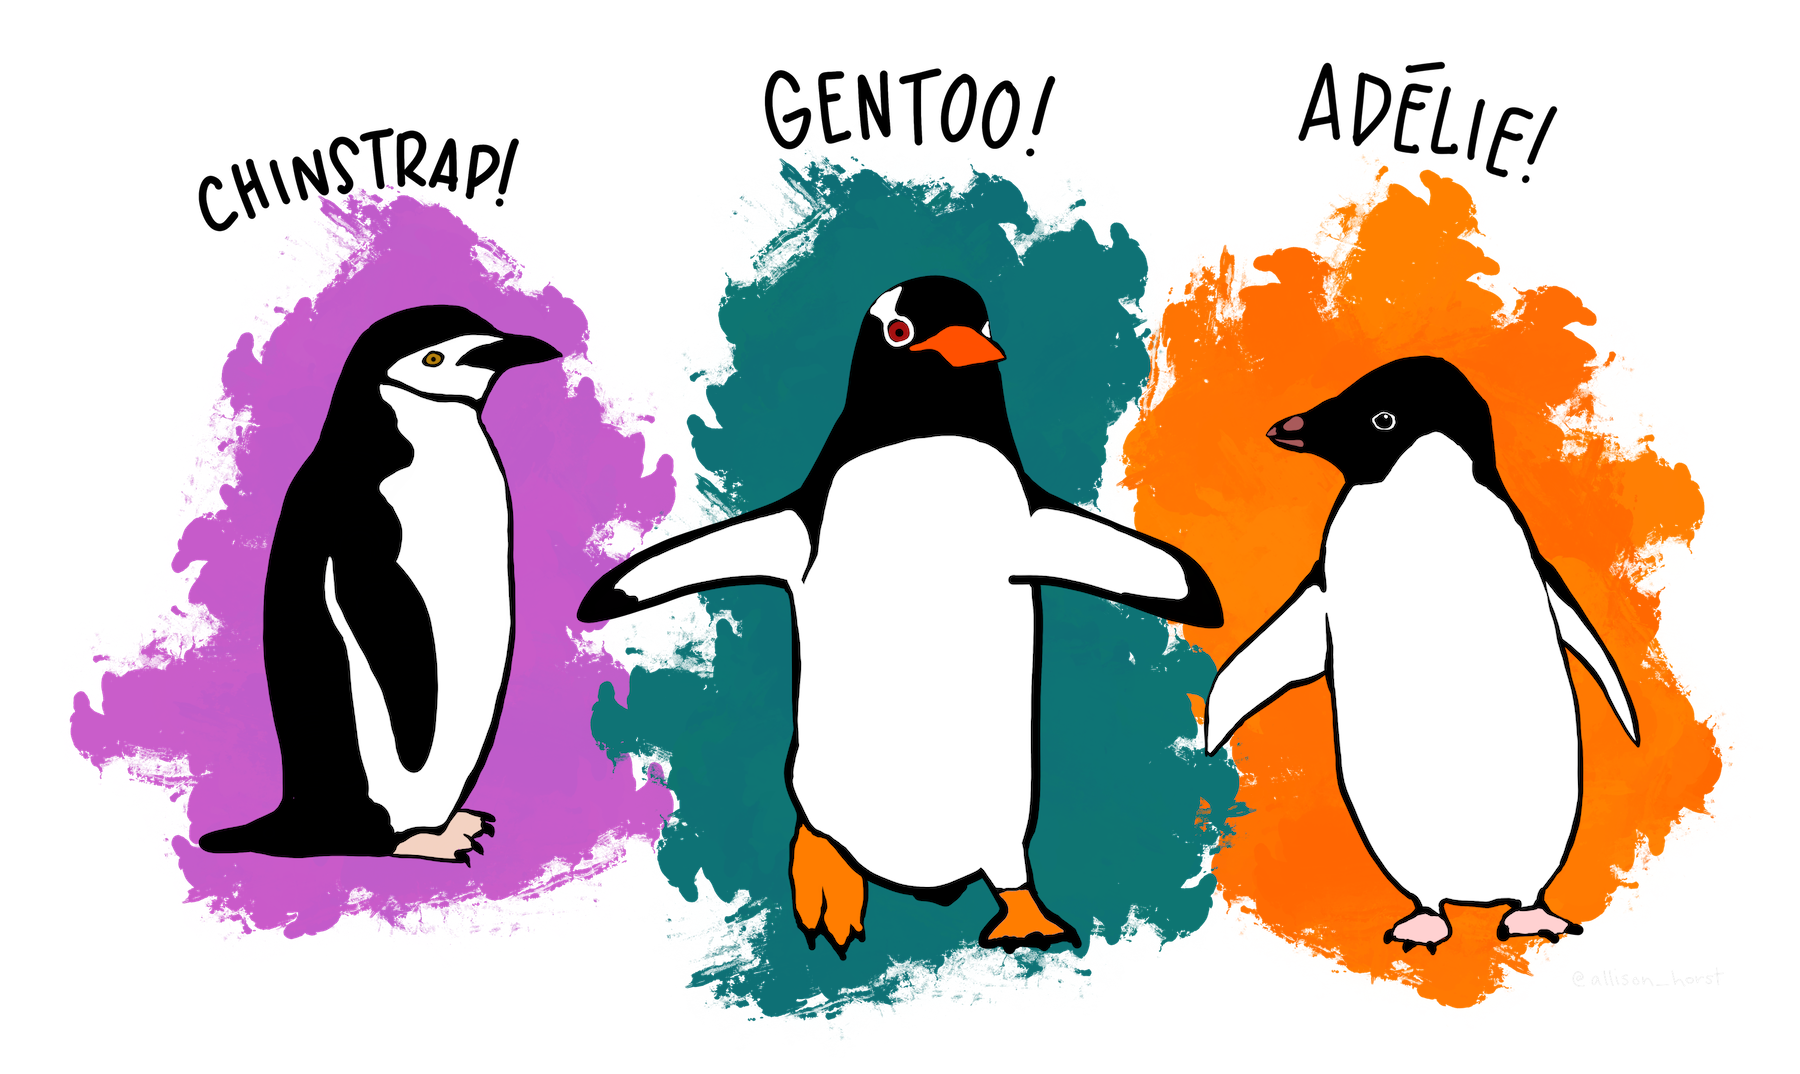 Illustration of three species of Palmer Archipelago penguins: Chinstrap, Gentoo, and Adelie. Artwork by @allison_horst.